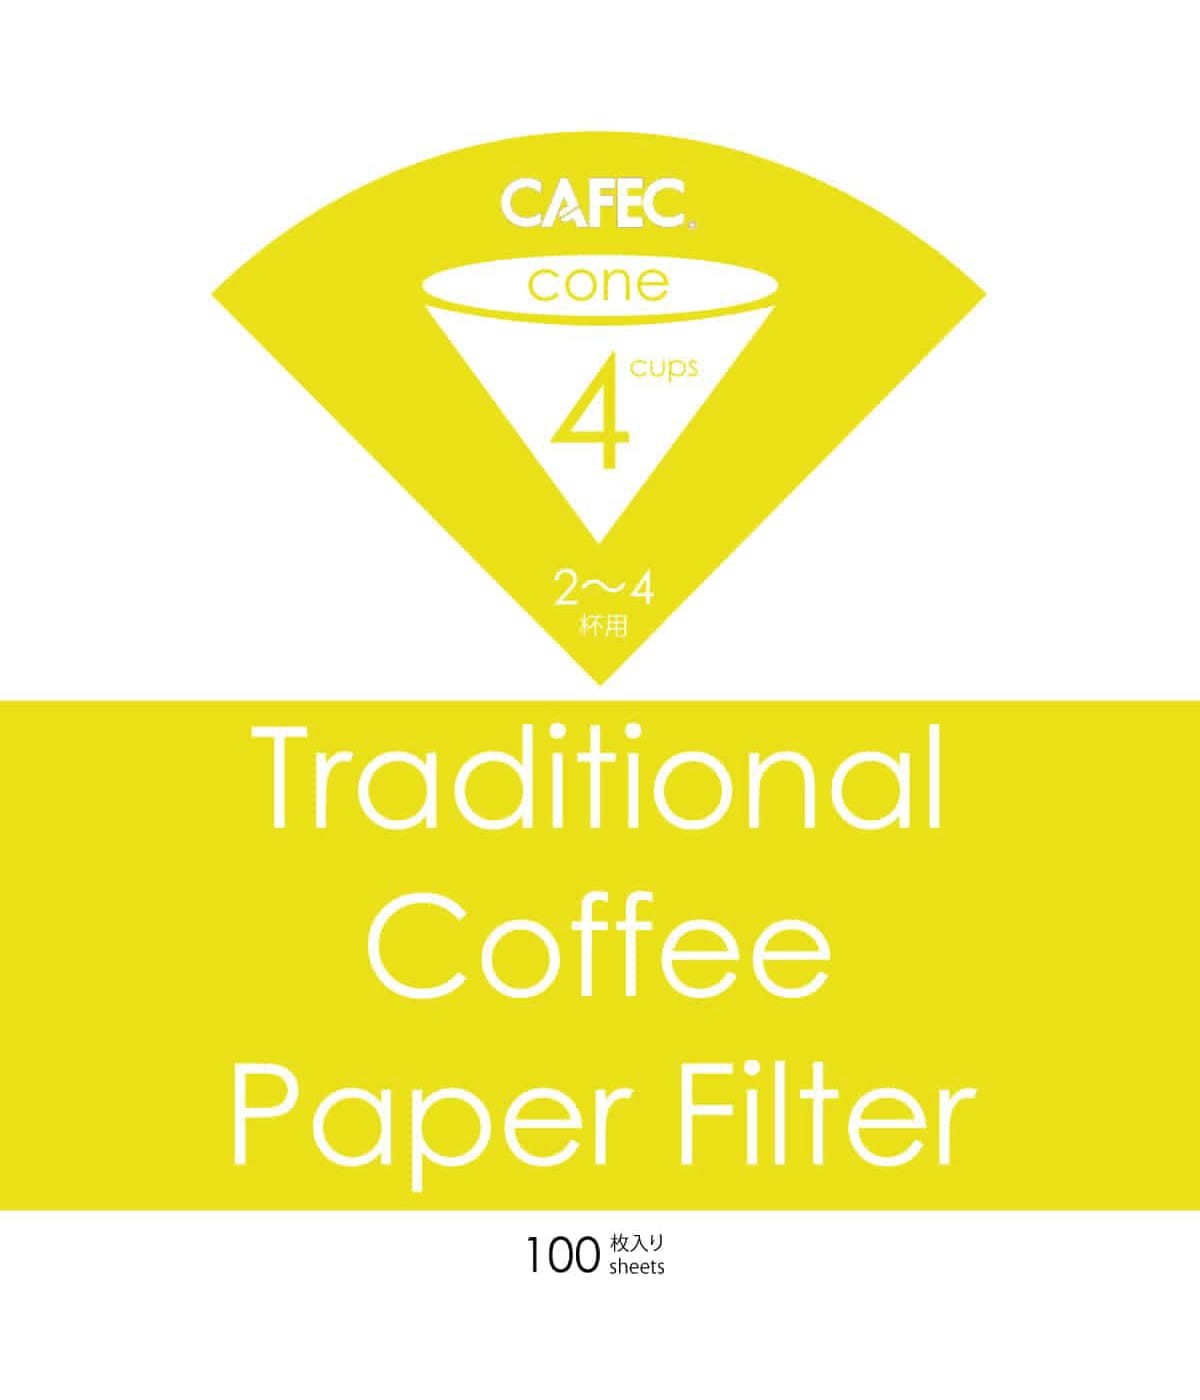 Cafec Traditional Filtre Kağıdı – CUP4 main variant image